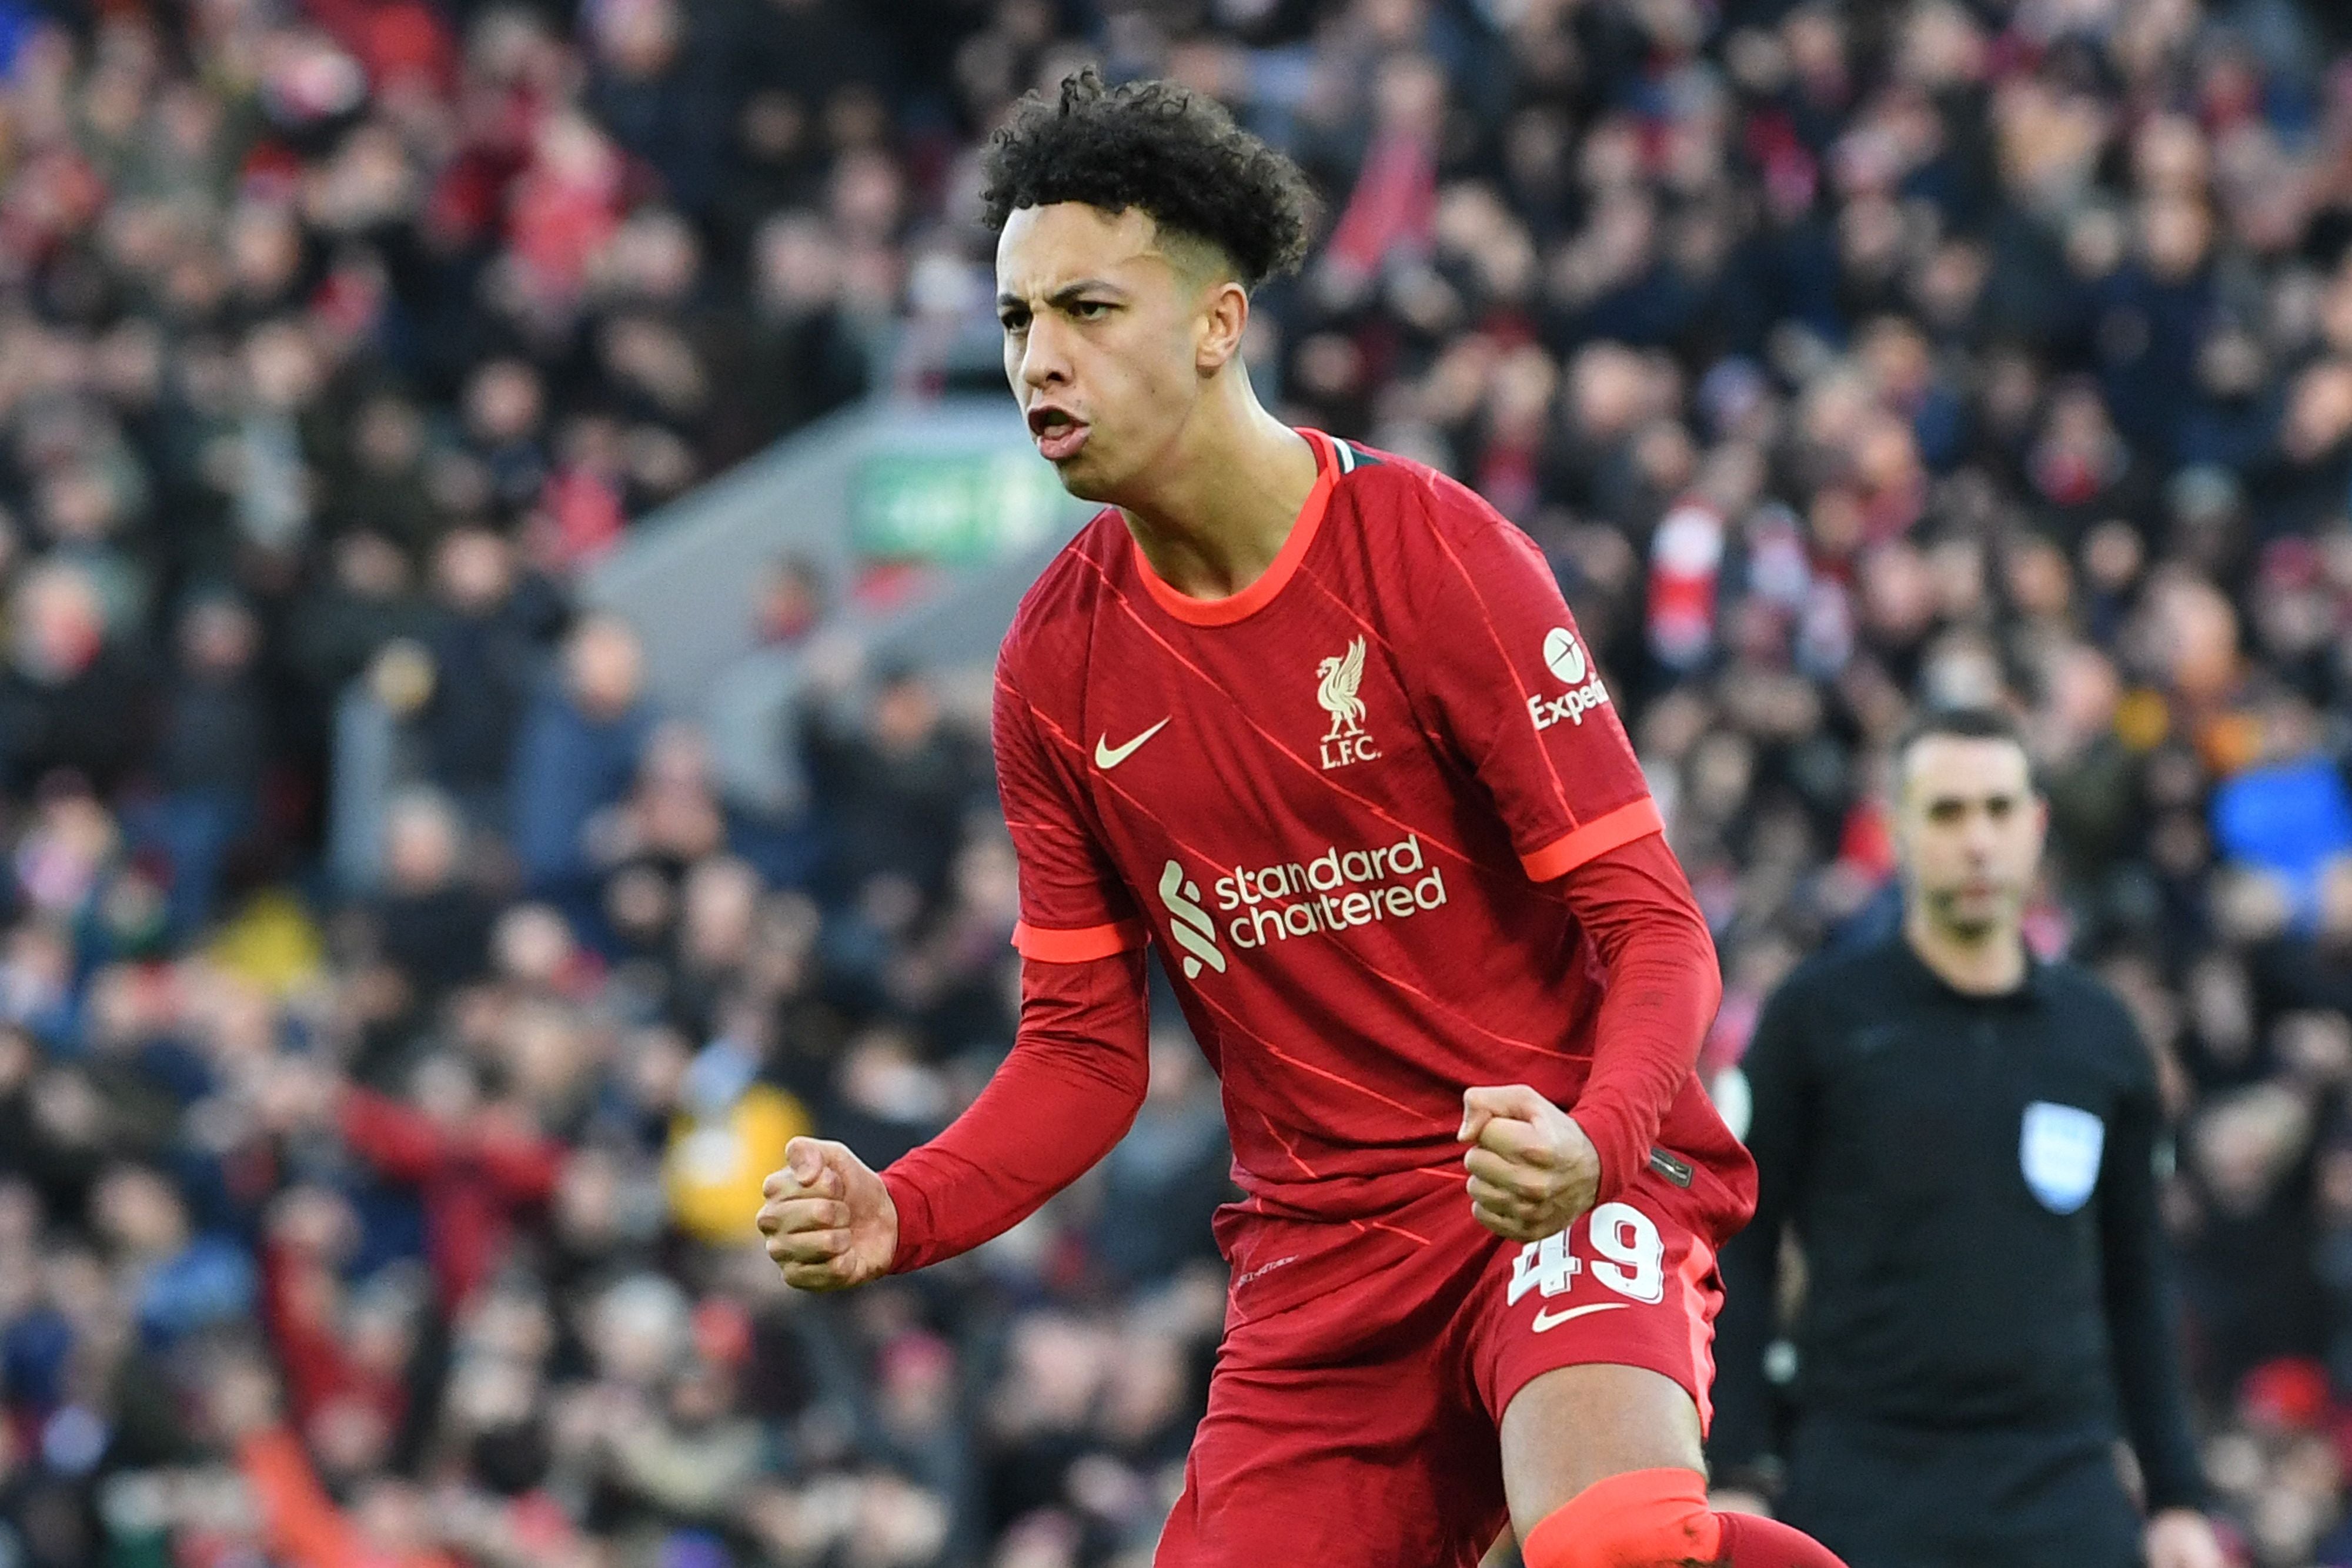 Kaide Gordon, 17, scored an important equaliser for Liverpool